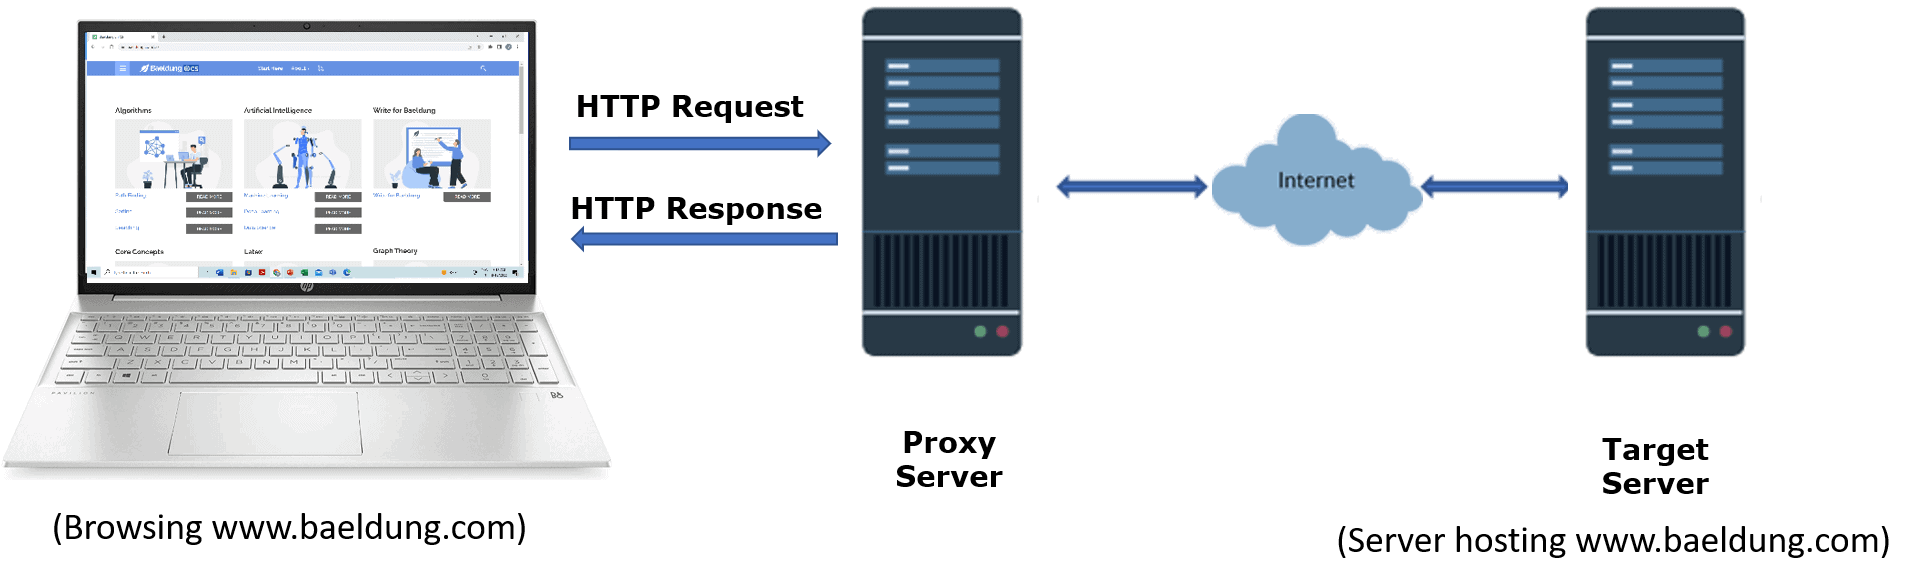 The figure shows browser communication via a proxy server